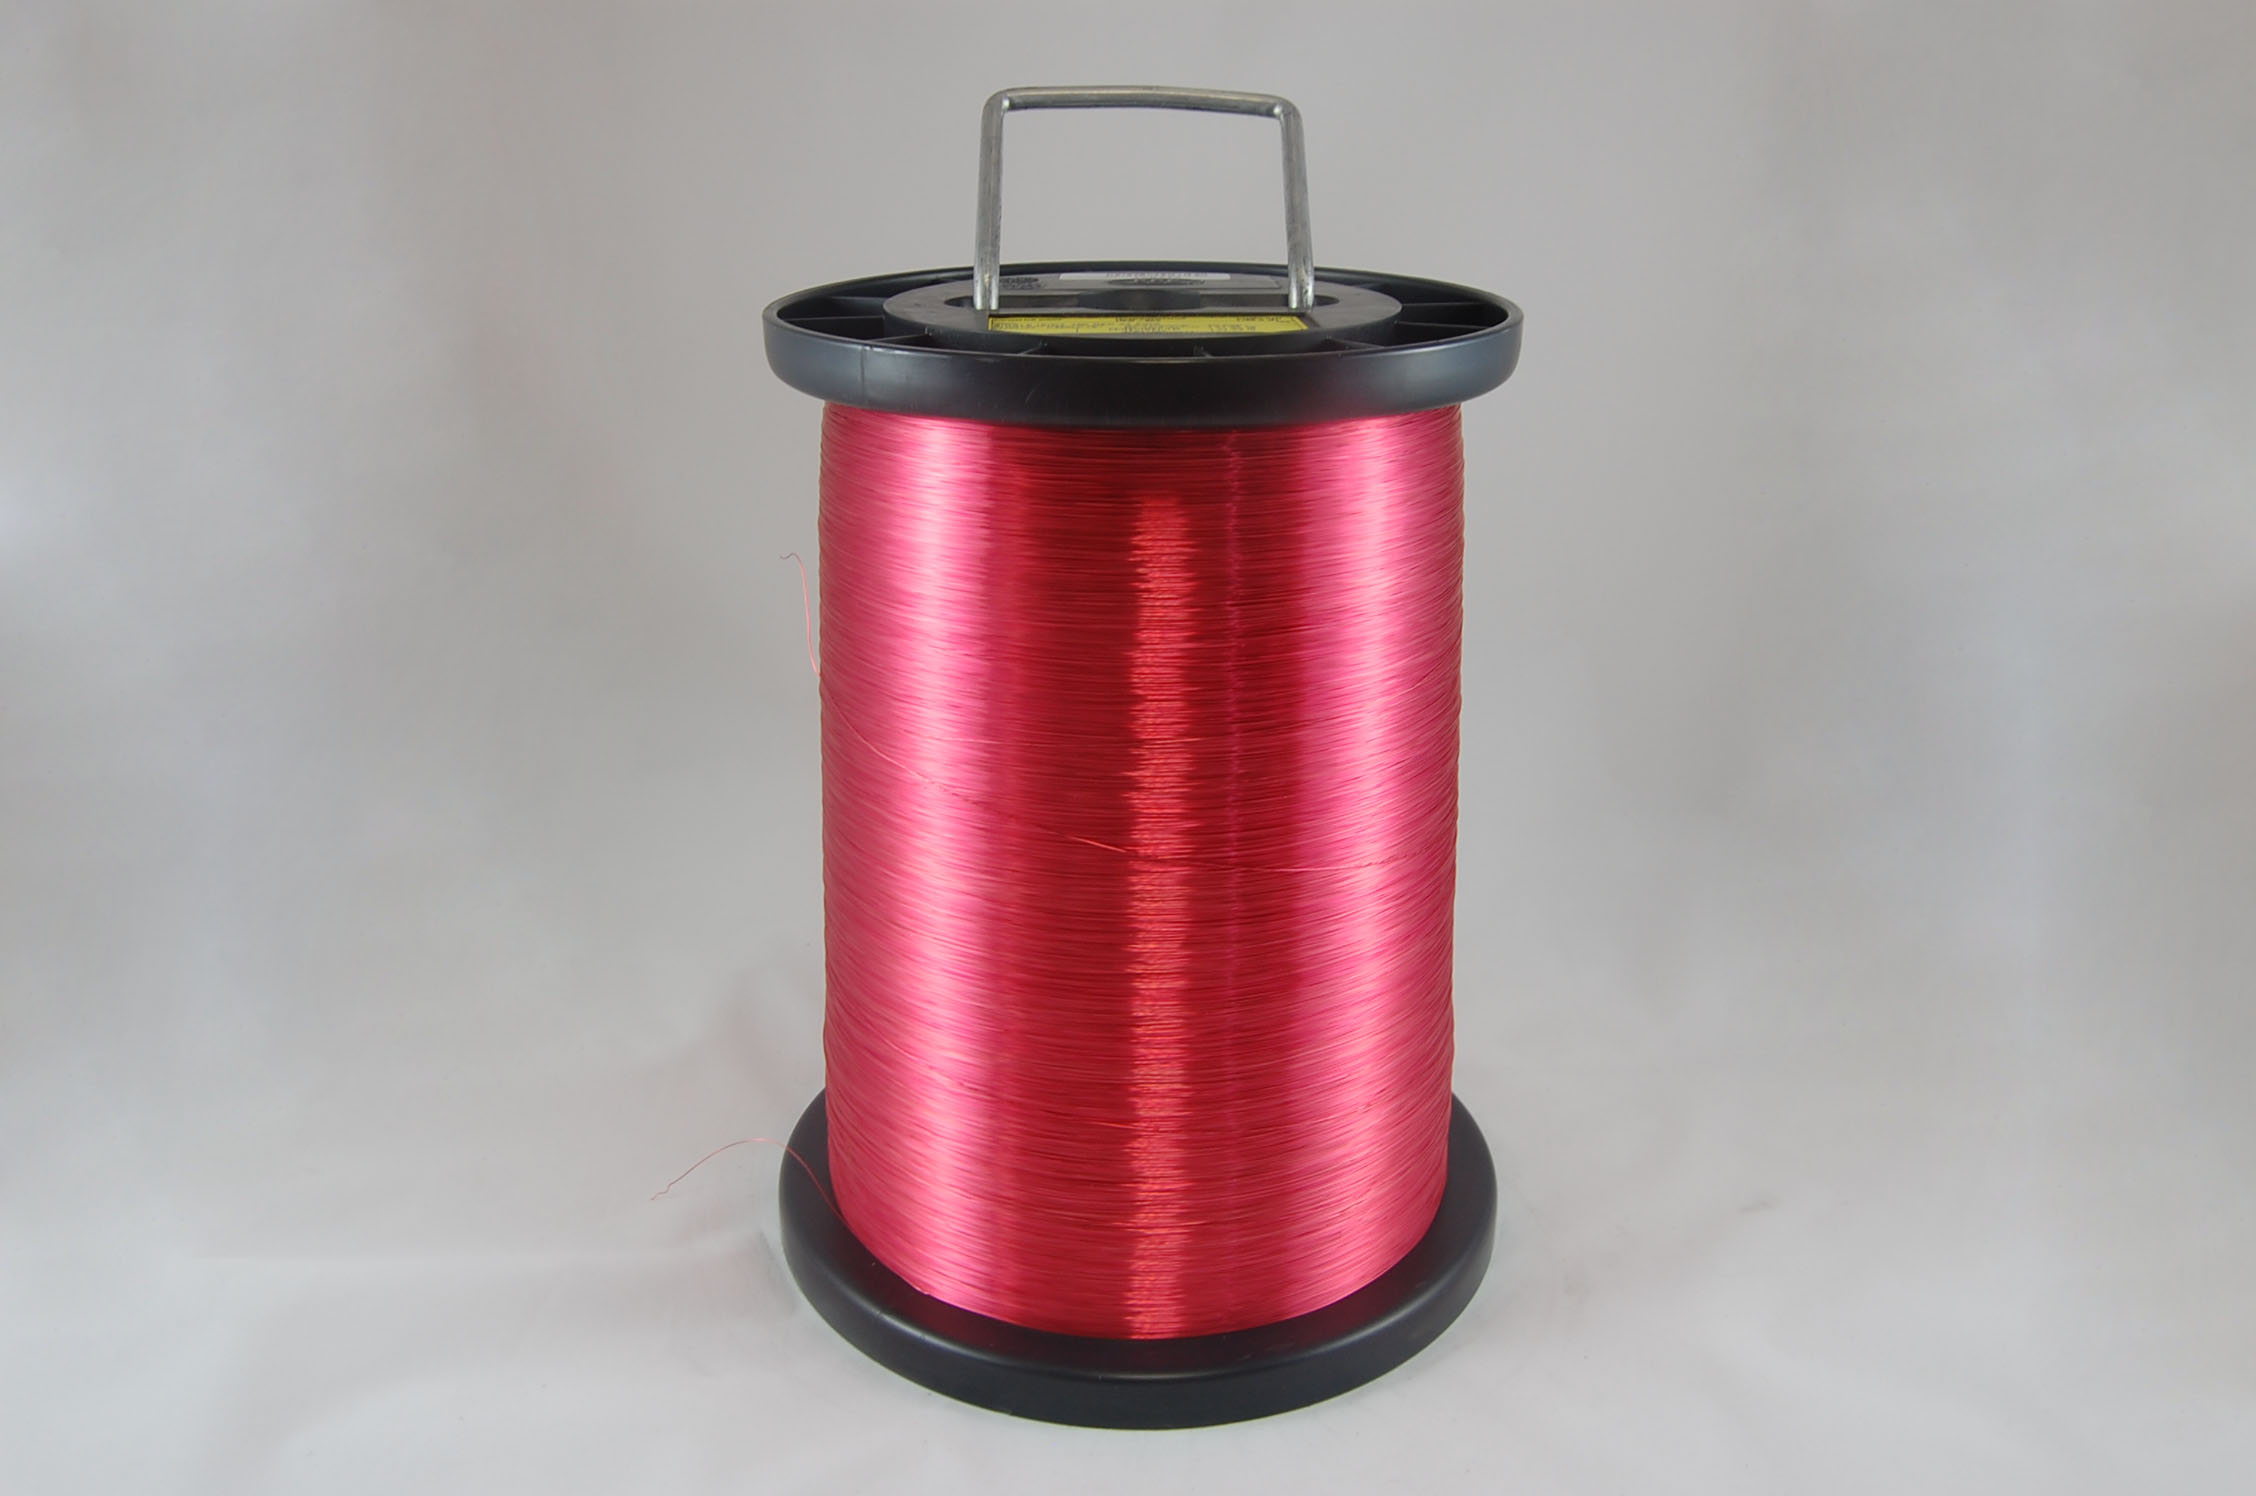 #20.5 Heavy INVEMID 200 Round MW 35 Copper Magnet Wire 200°C, copper, 45 LB half pack pail (average wght.)